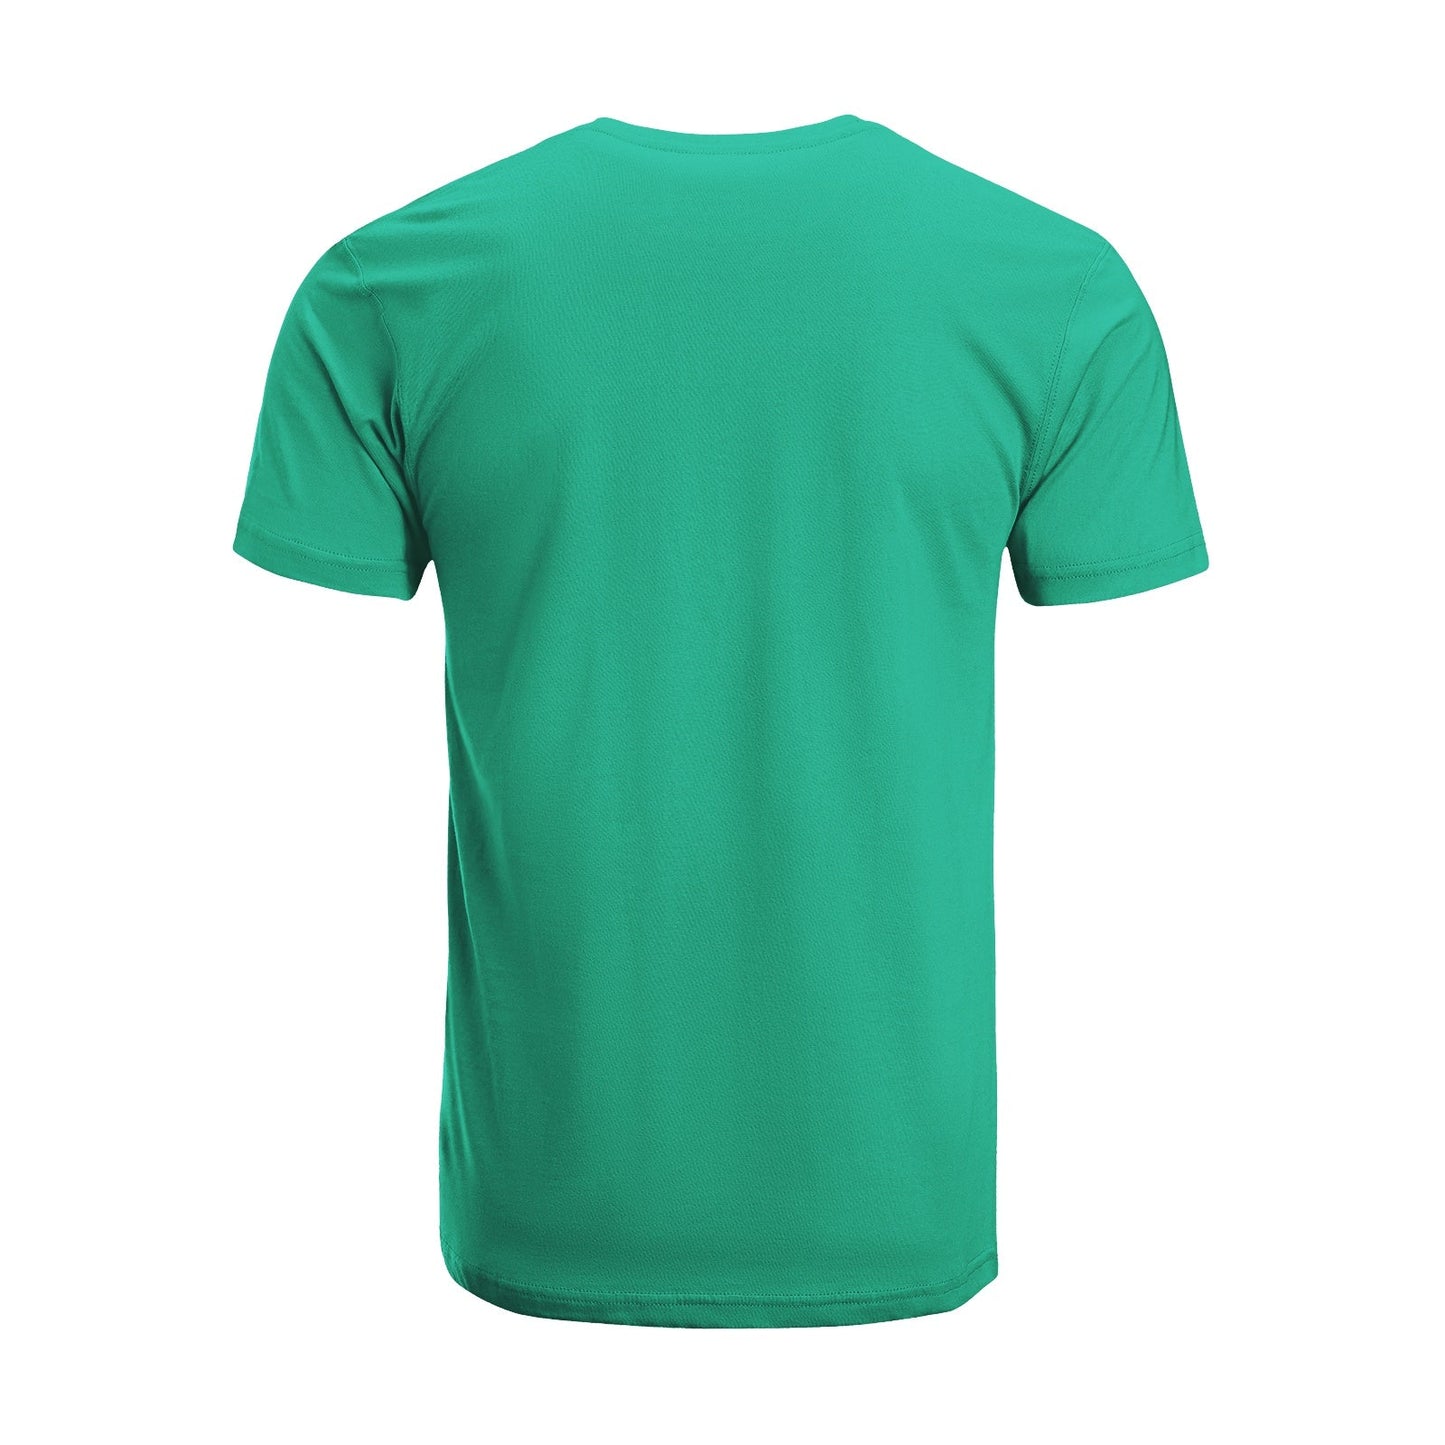 Unisex Short Sleeve Crew Neck Cotton Jersey T-Shirt MOM 39